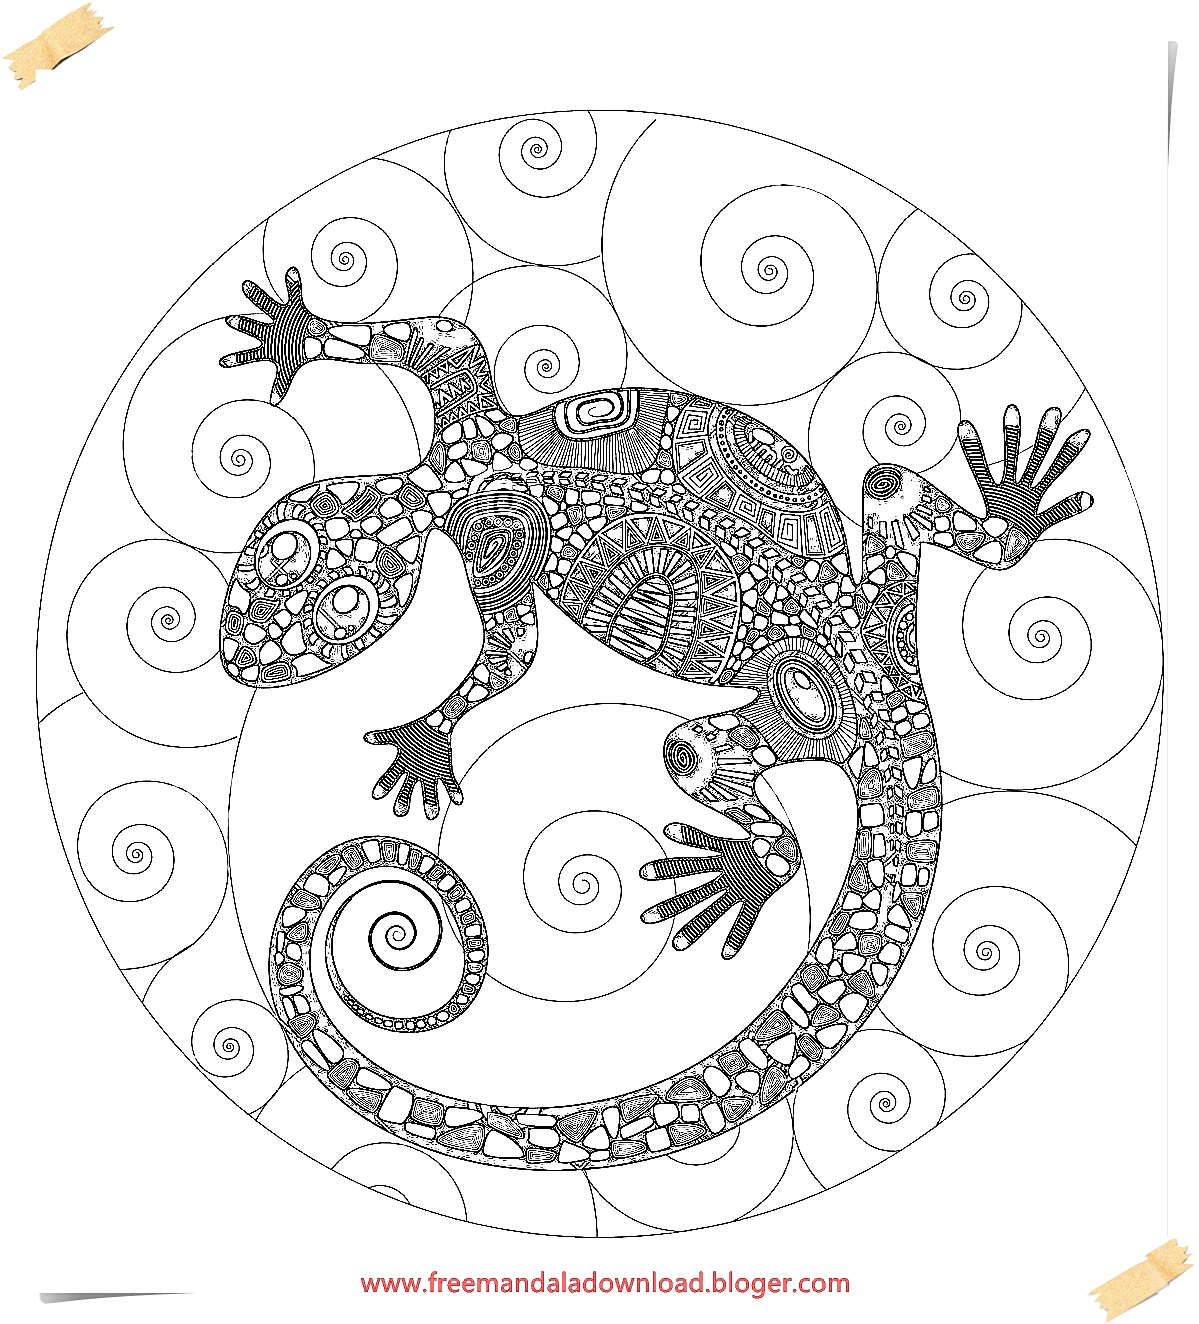 Lizard Mandala Malvorlagen-Lizard Mandala coloring page - Free Mandala